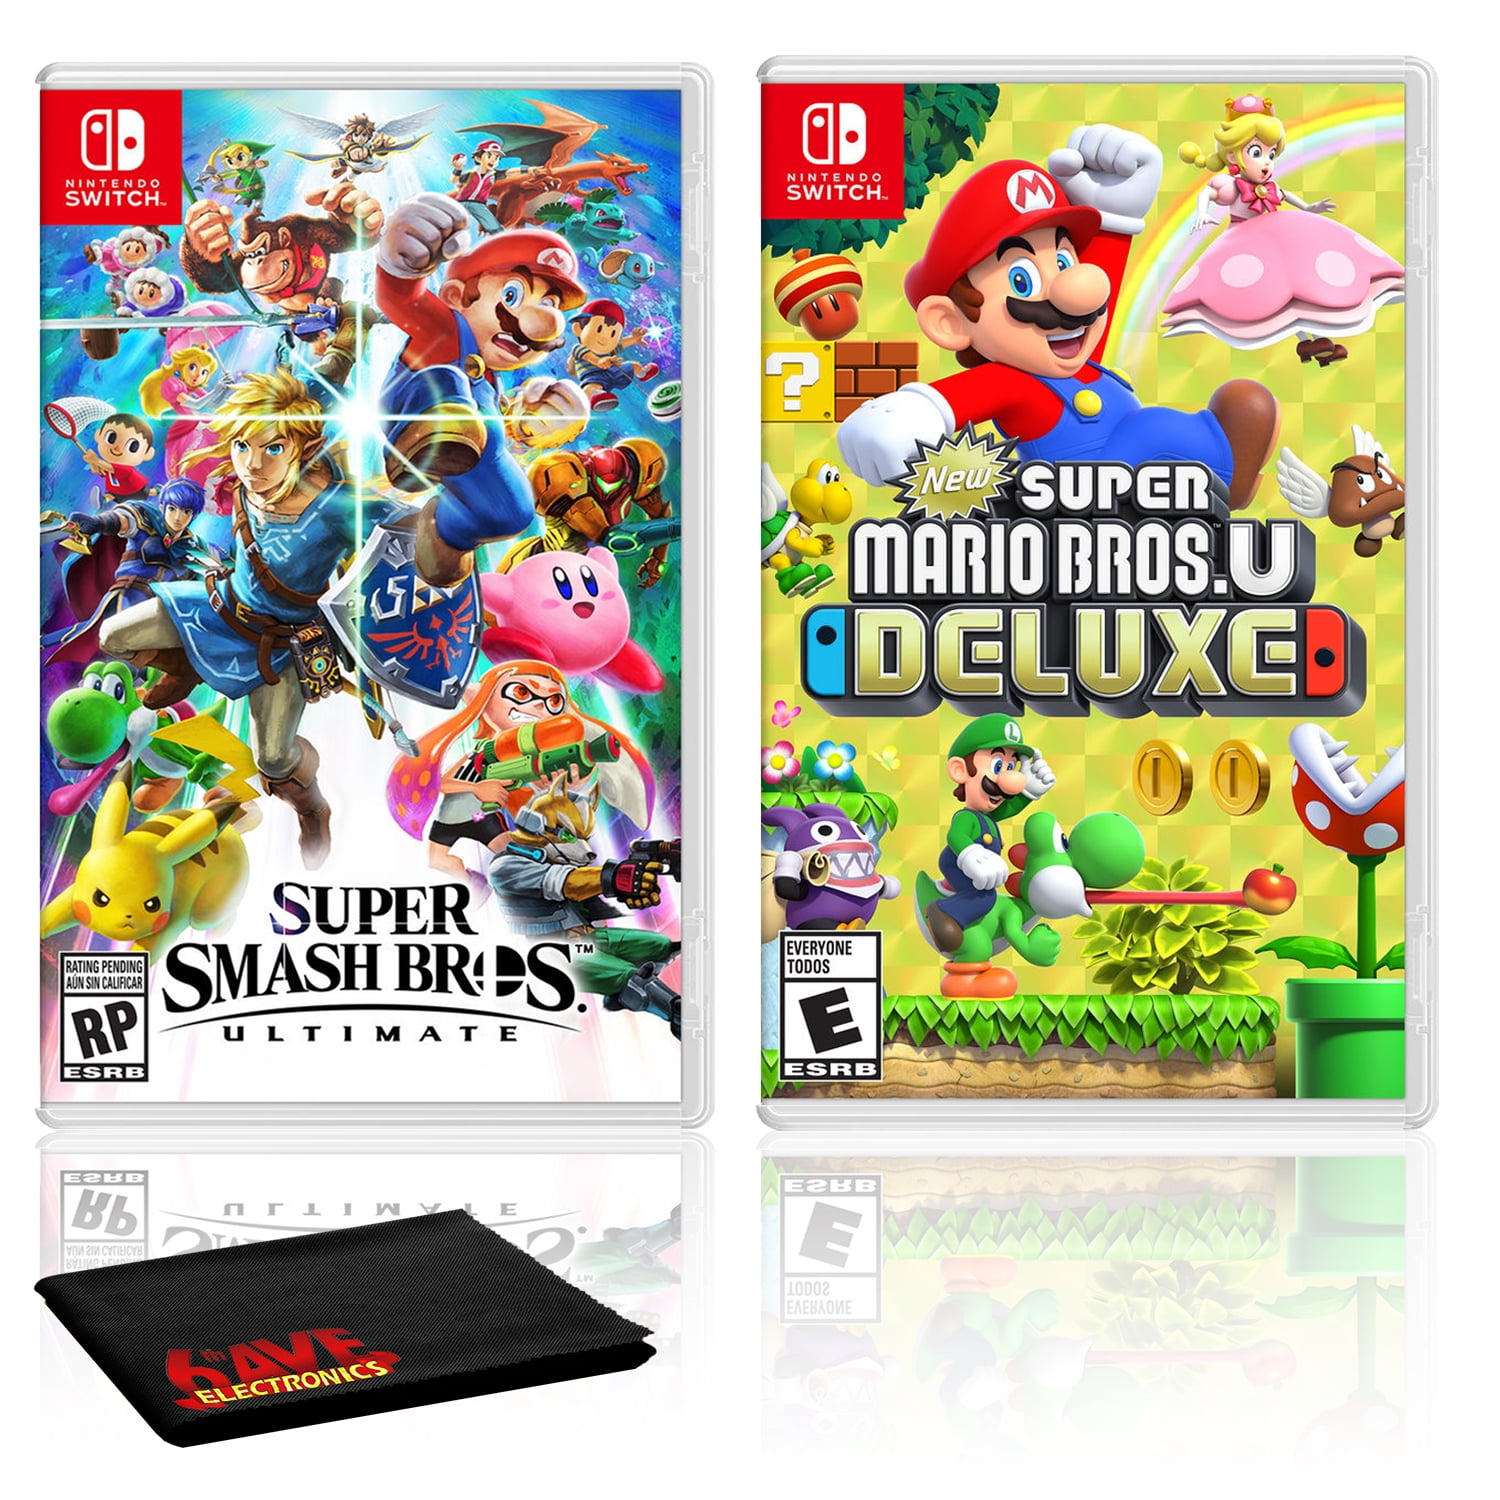 Super Smash Bros. Ultimate with New Super Mario Bros. U Deluxe, Nintendo  Switch, HACPAAABA-008